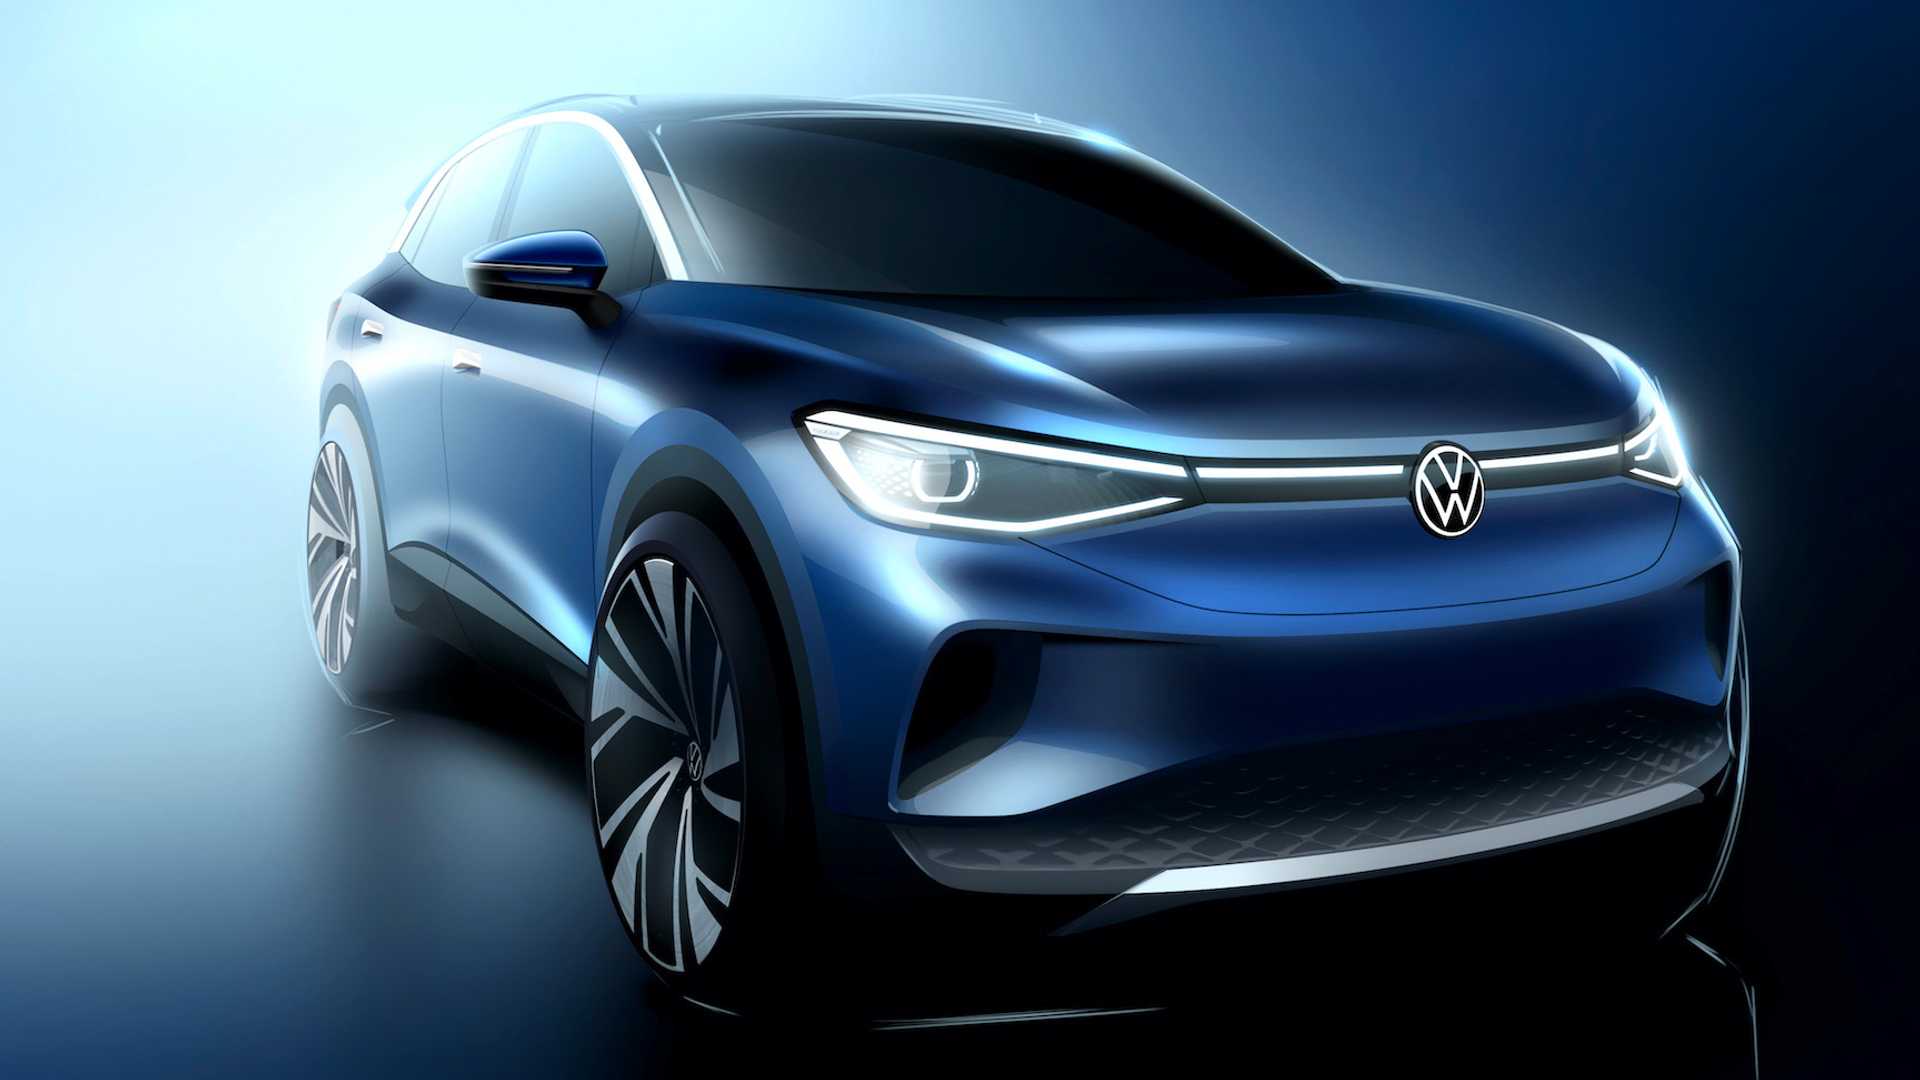 VW ID.4 electric crossover-SUV sketch